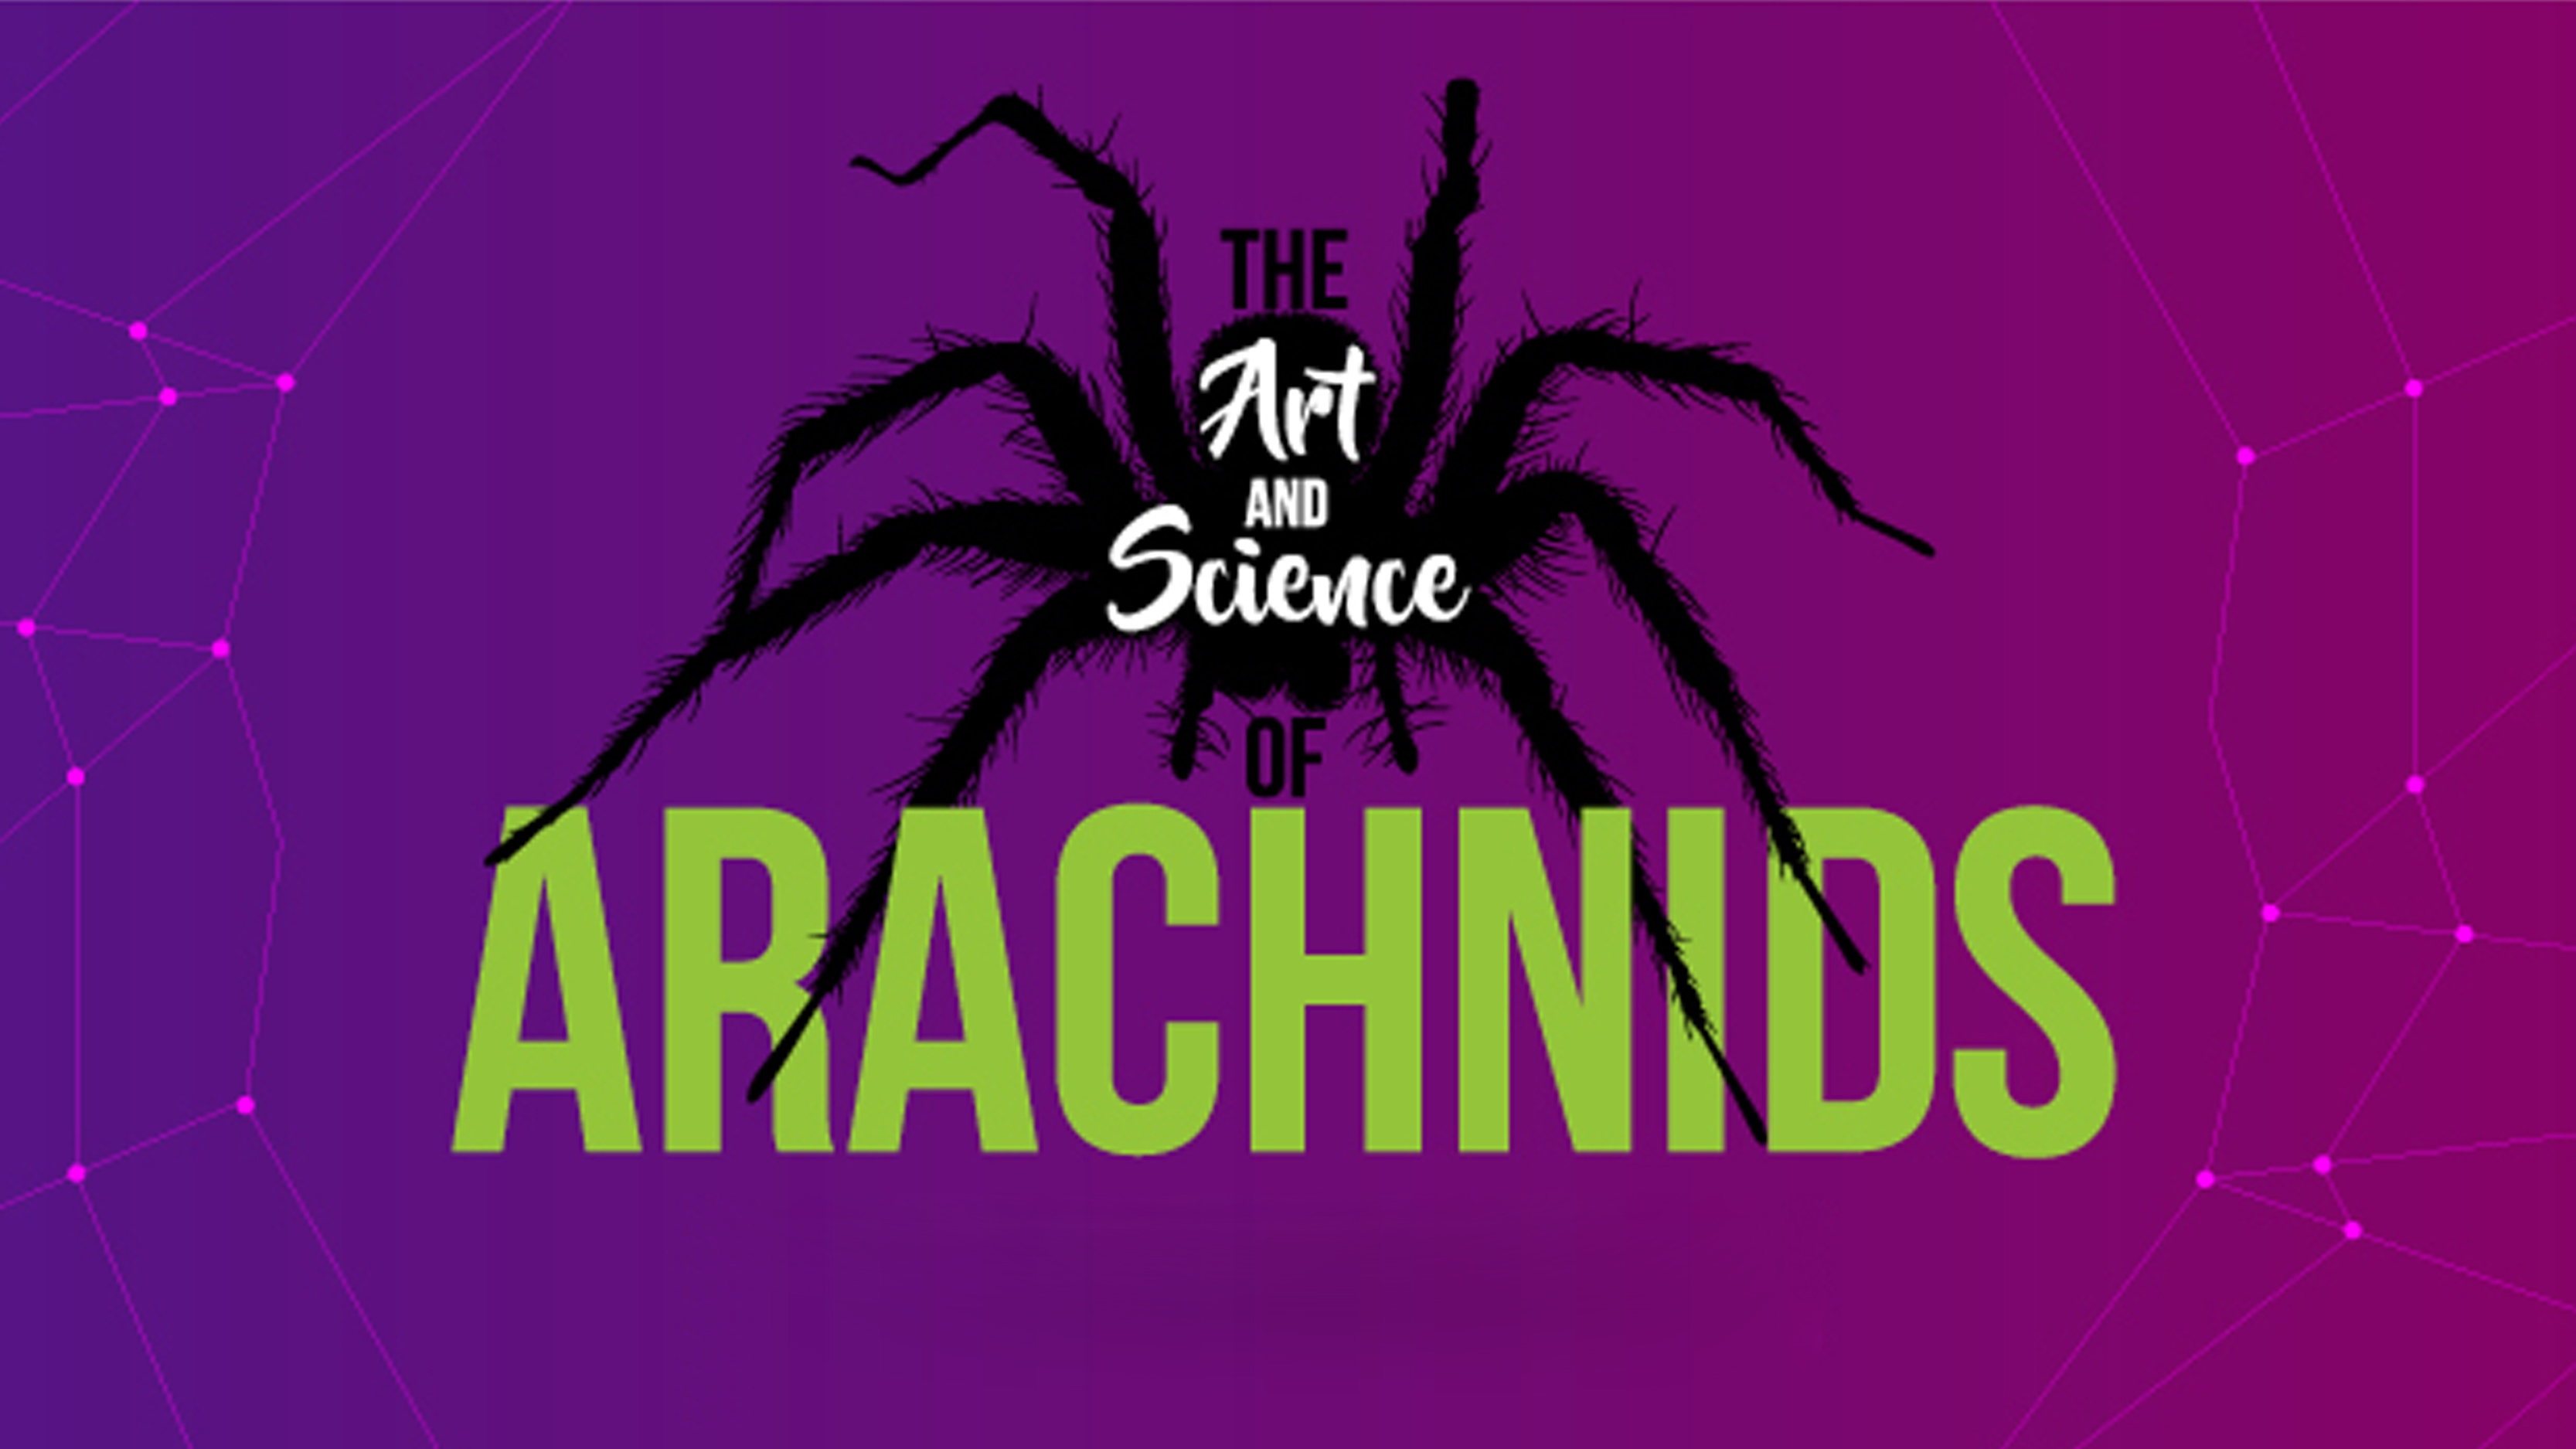 art and science of arachnids past exhibition lp